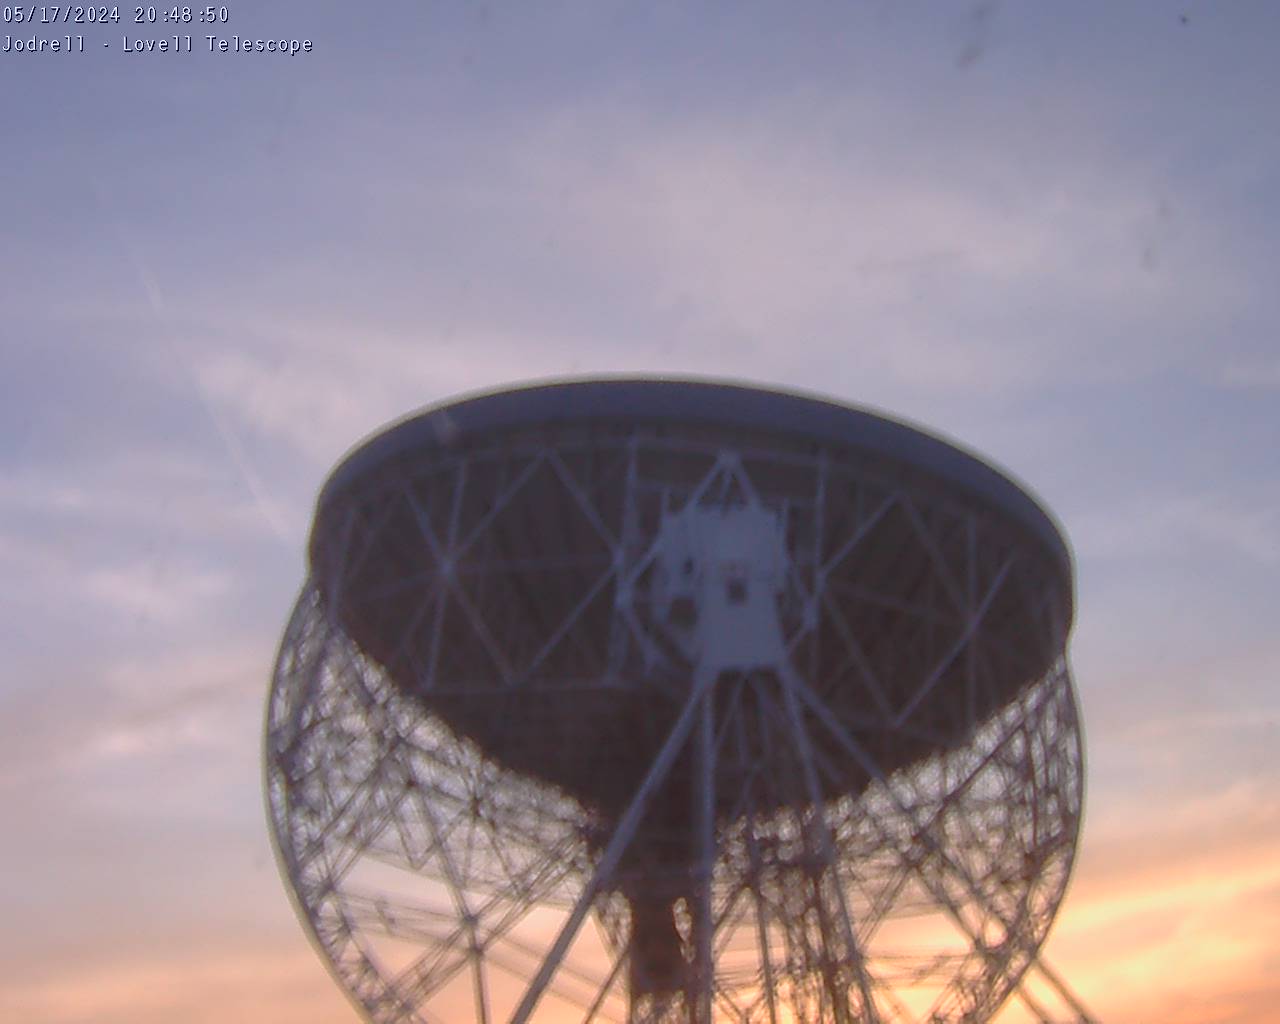 Observatorio Jodrell Bank Vie. 20:49